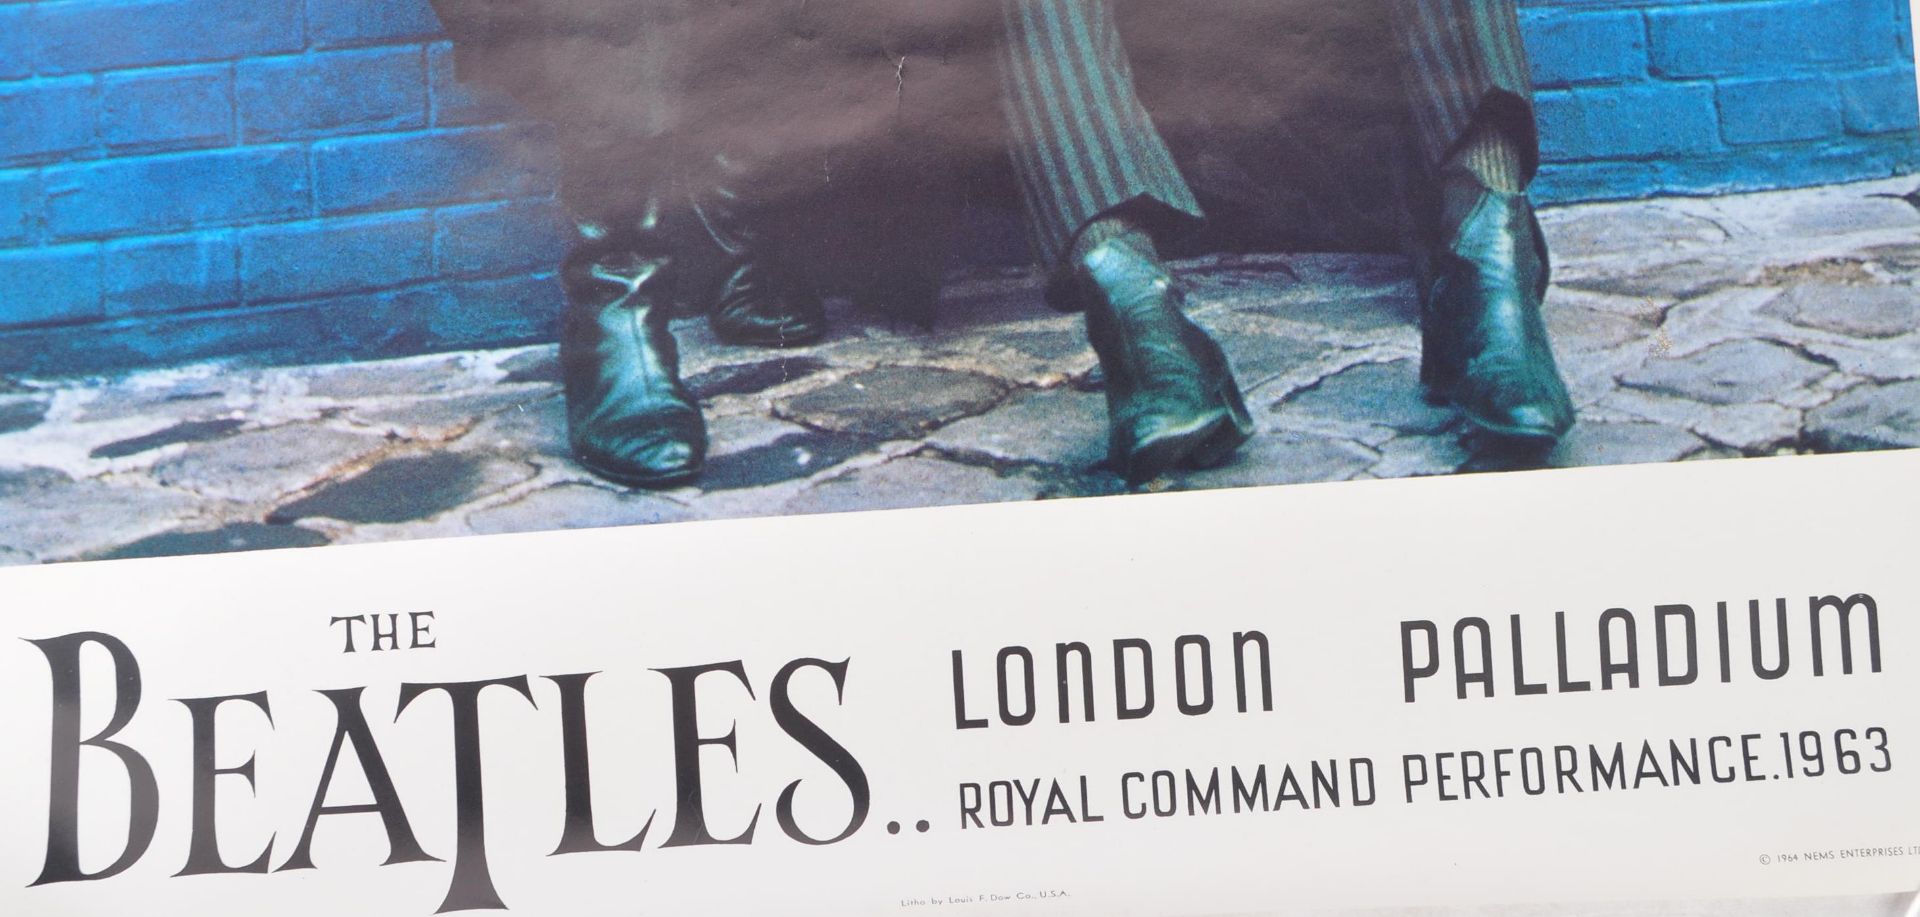 THE BEATLES ROYAL COMMAND PERFORMANCE LONDON PALLADIUM POSTER - Image 2 of 4